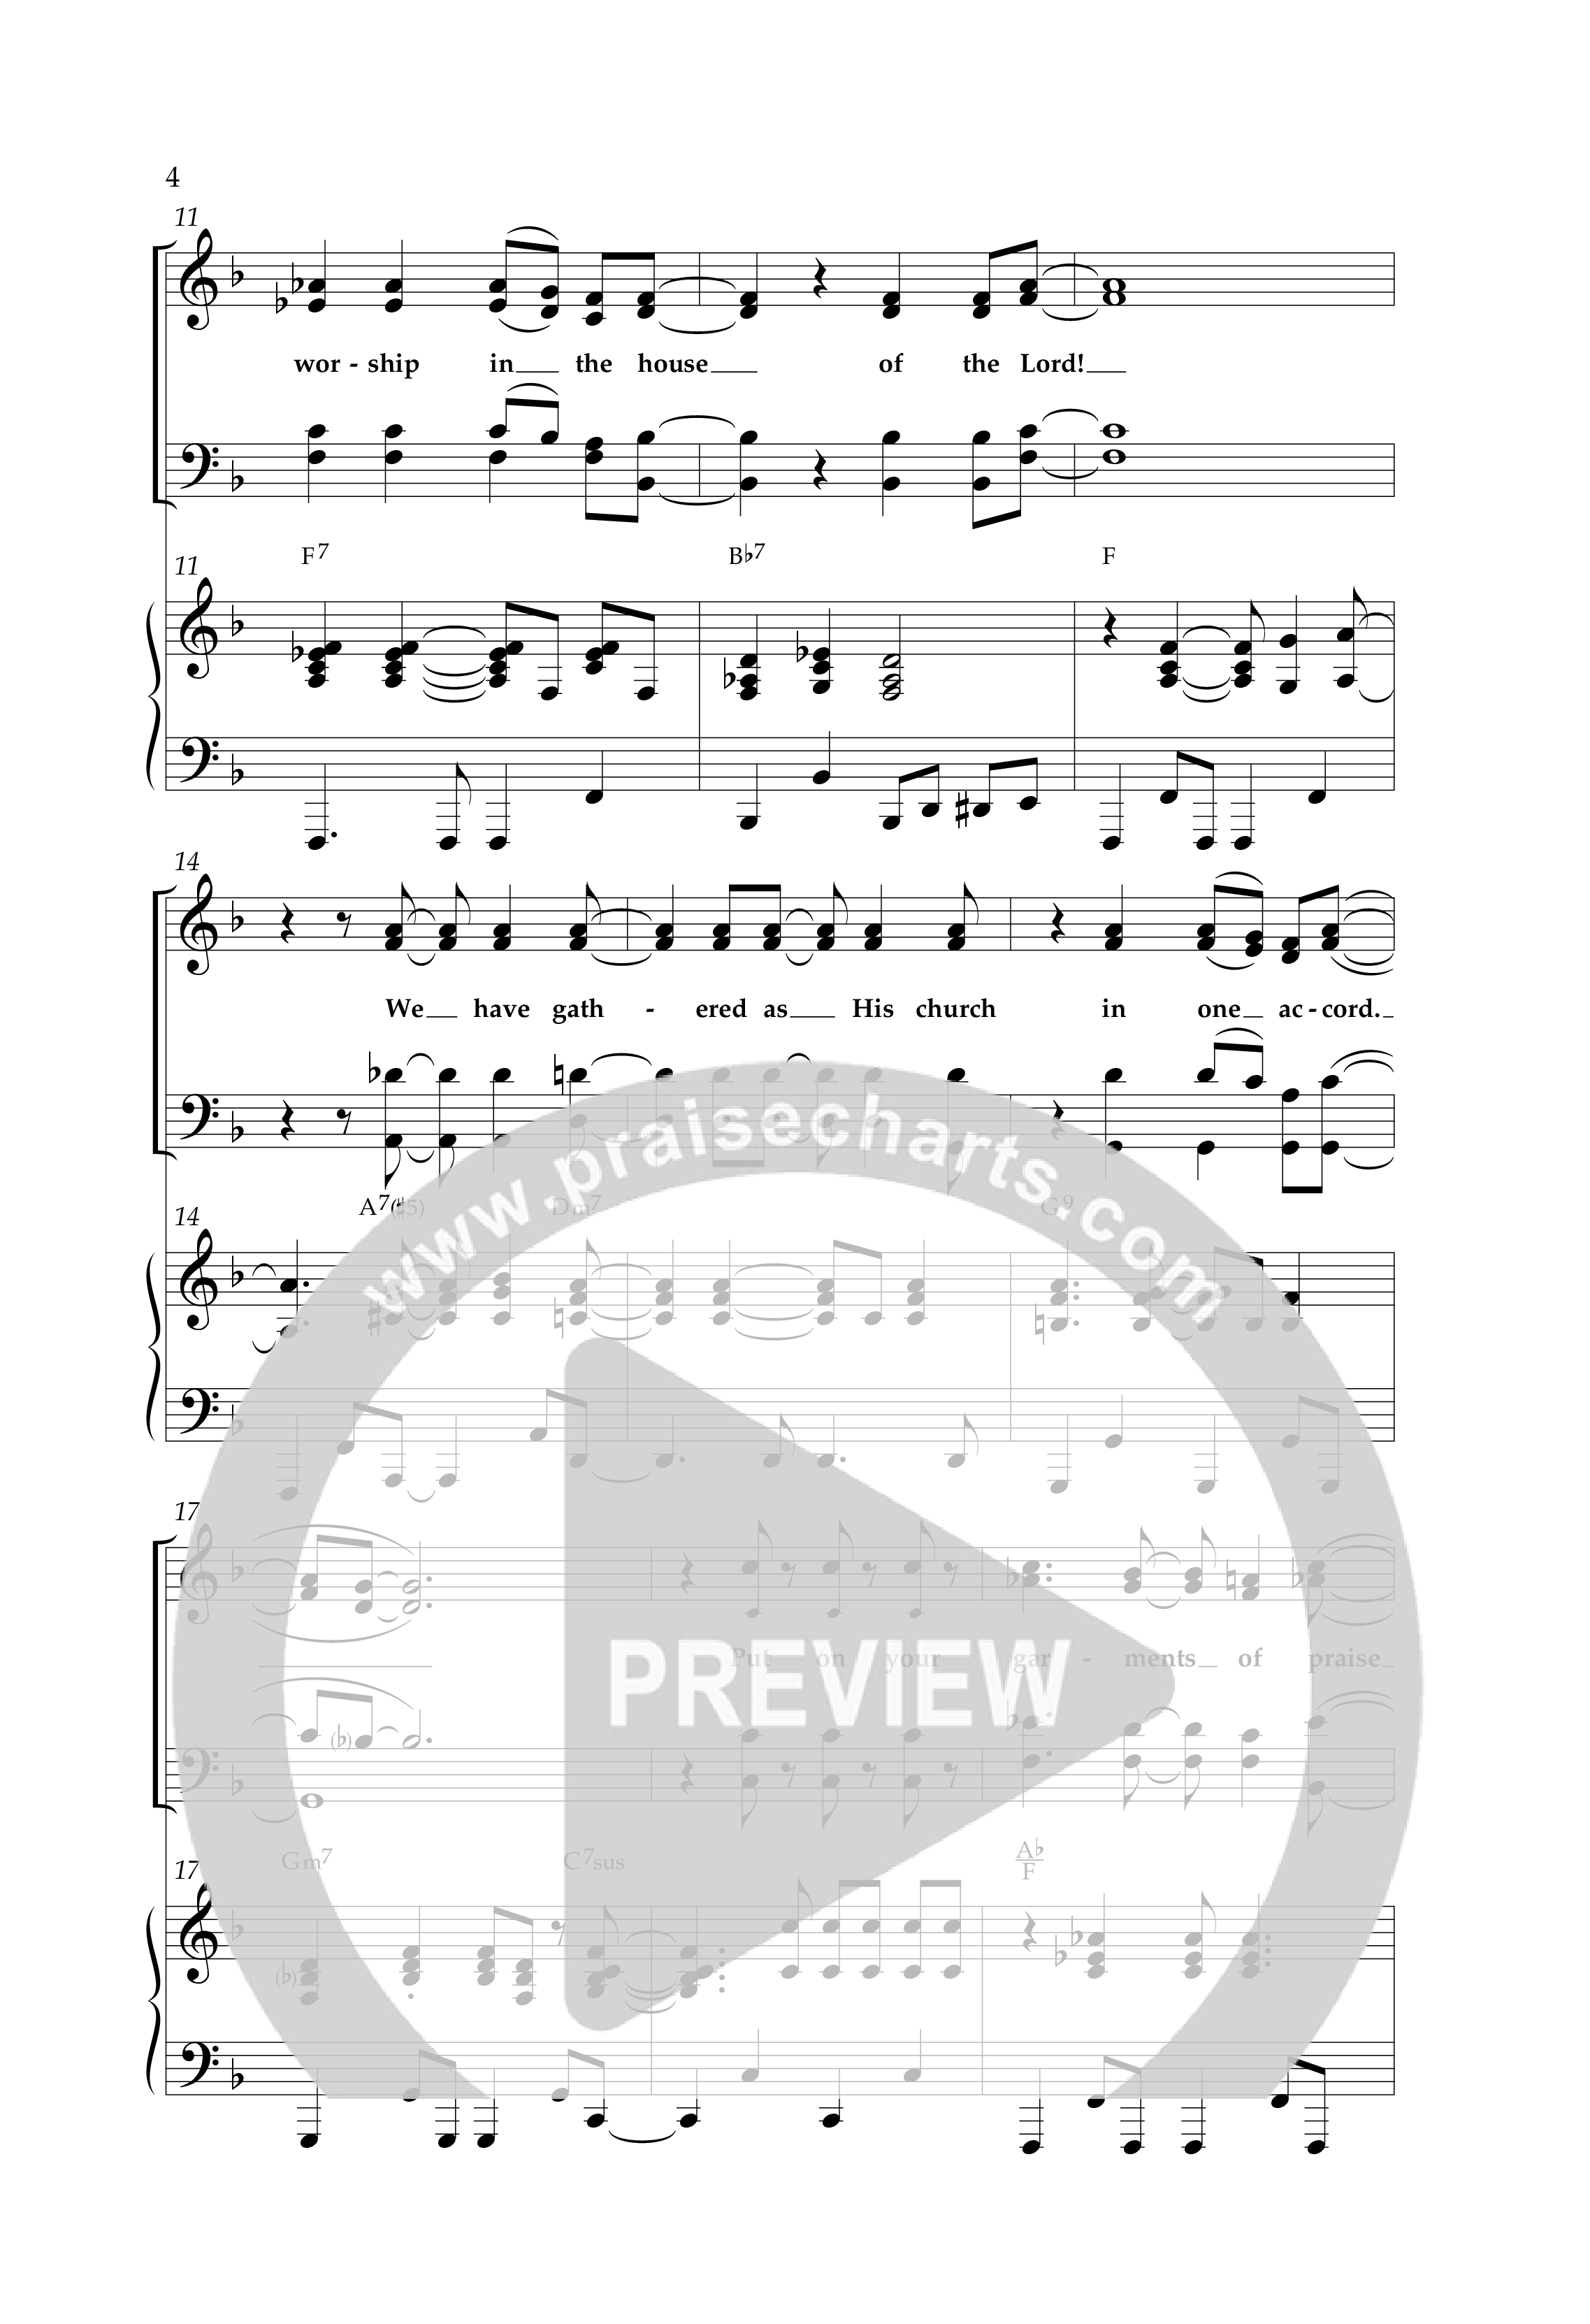 Worship In The House (Choral Anthem SATB) Anthem (SATB/Piano) (Lifeway Choral / Arr. Cliff Duren)